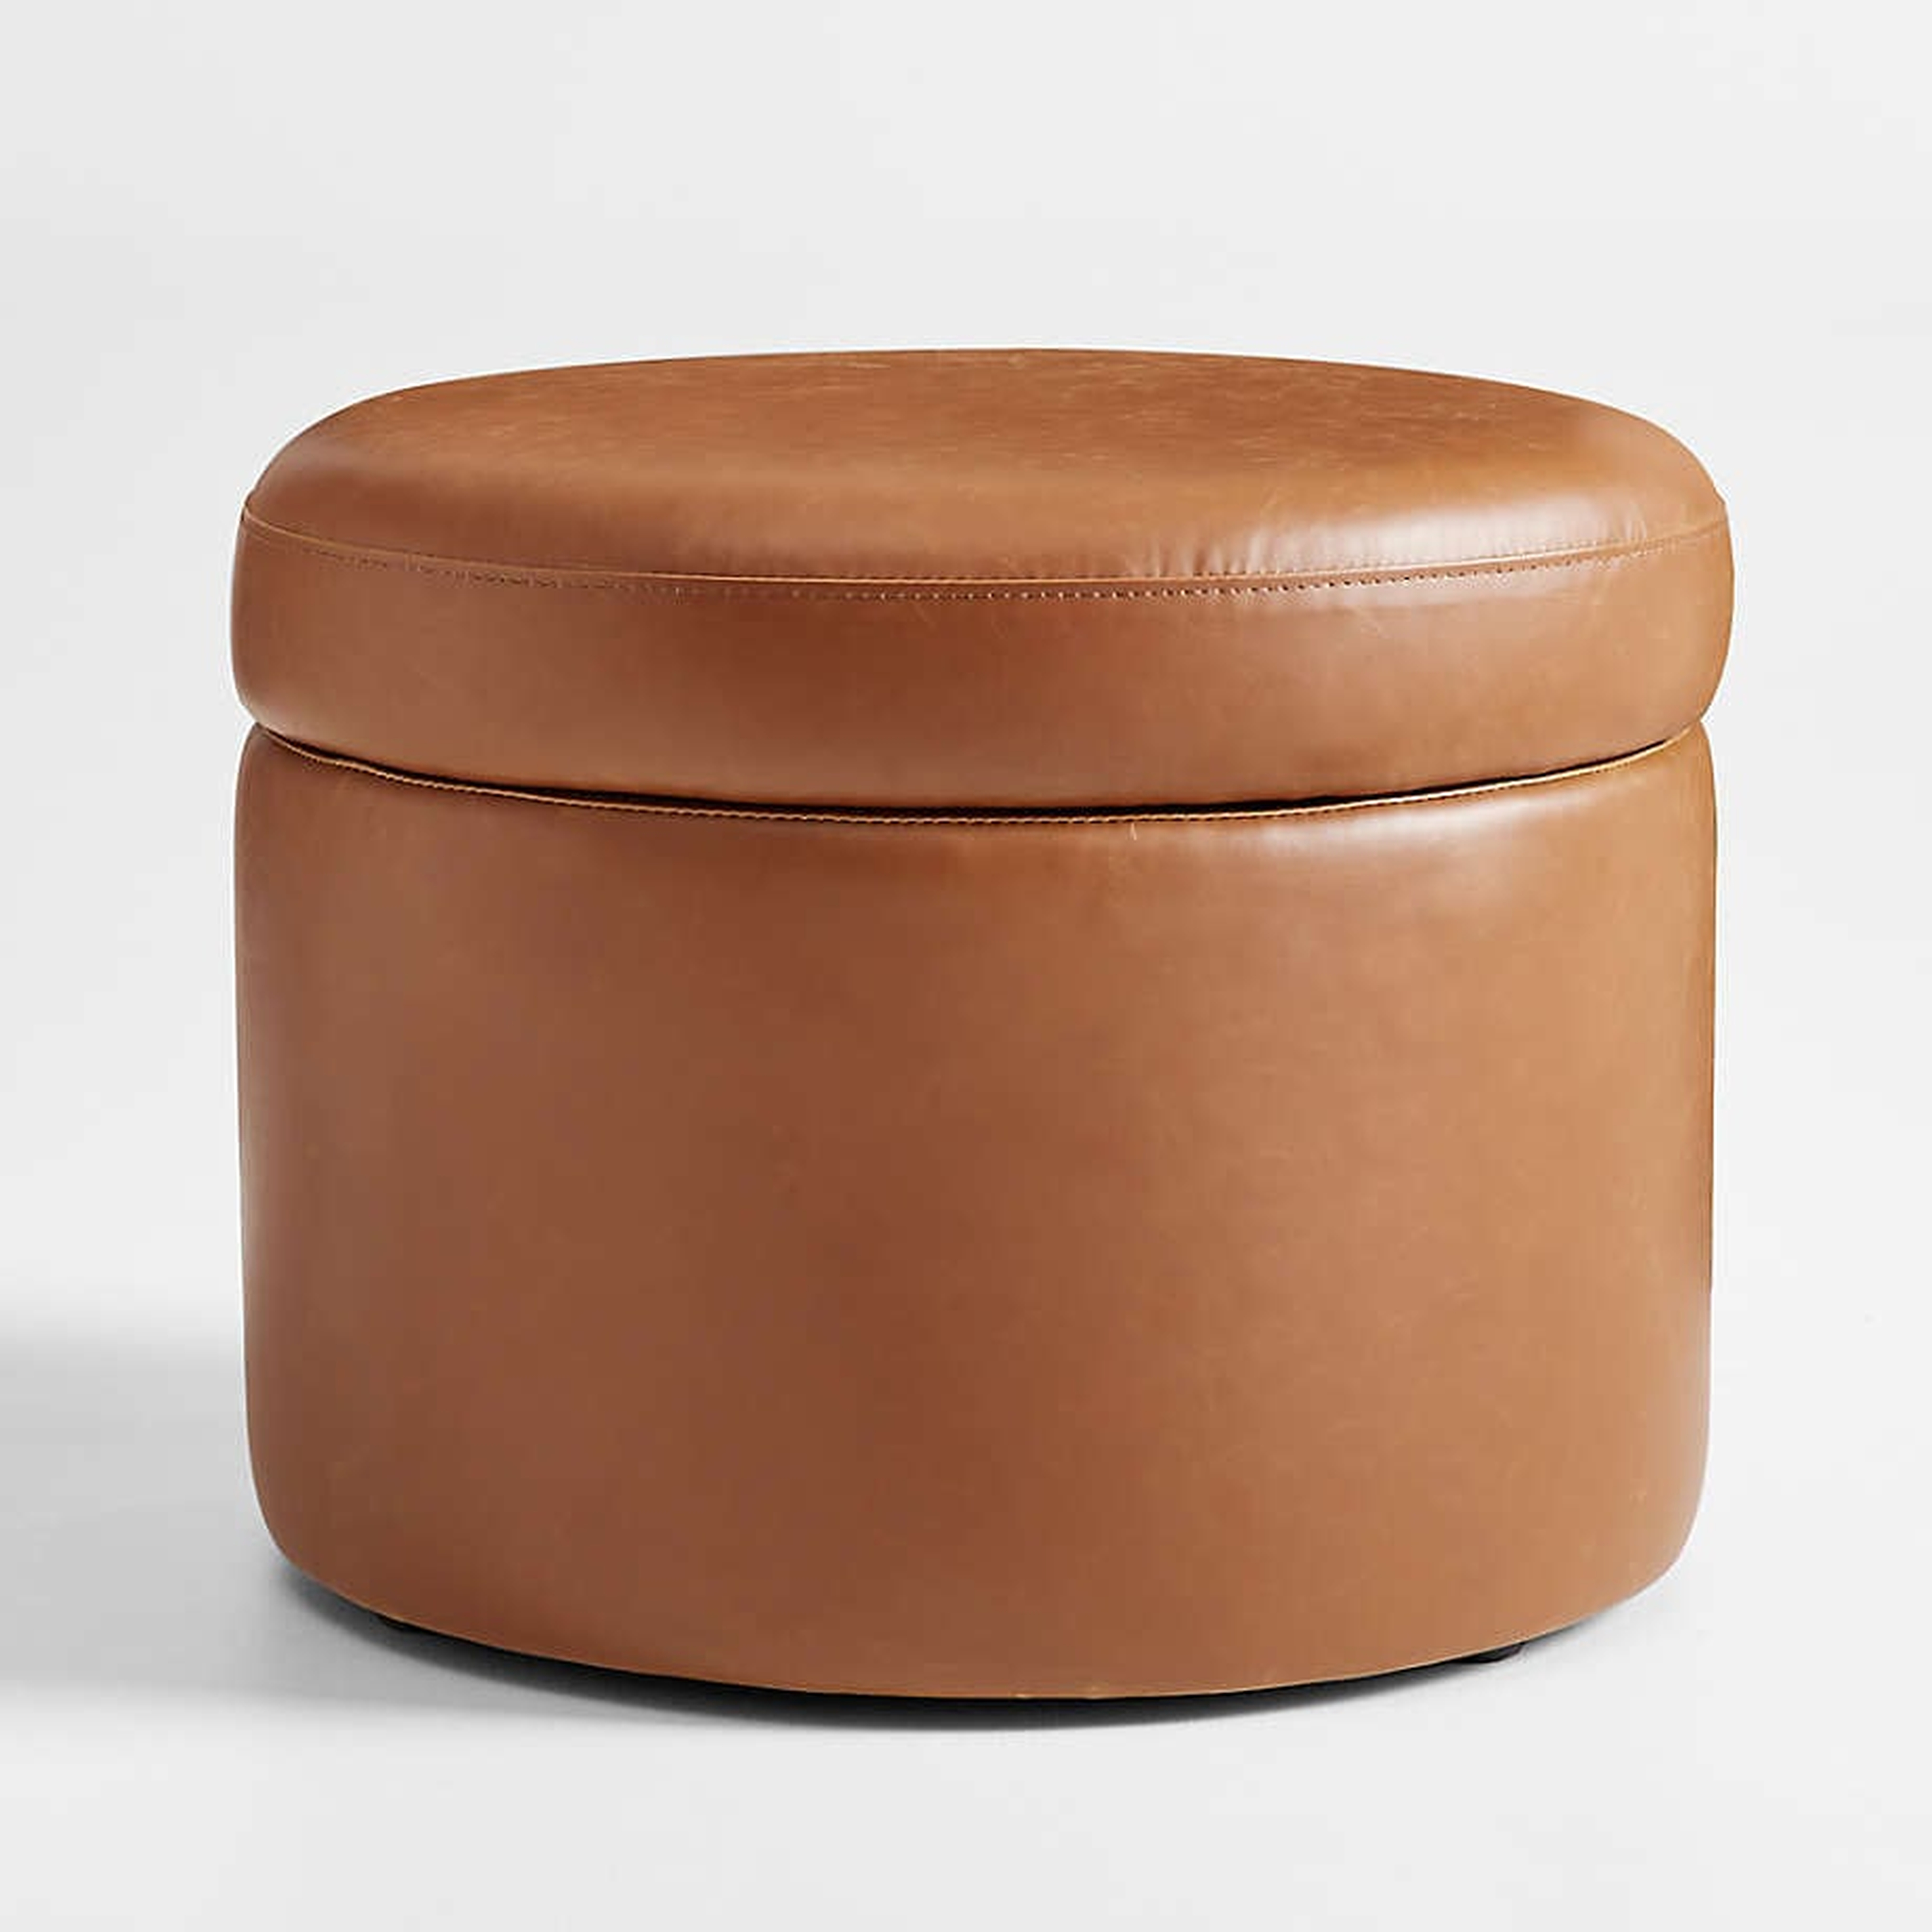 Wally Storage Nursery Ottoman Tan Vegan Leather - Crate and Barrel